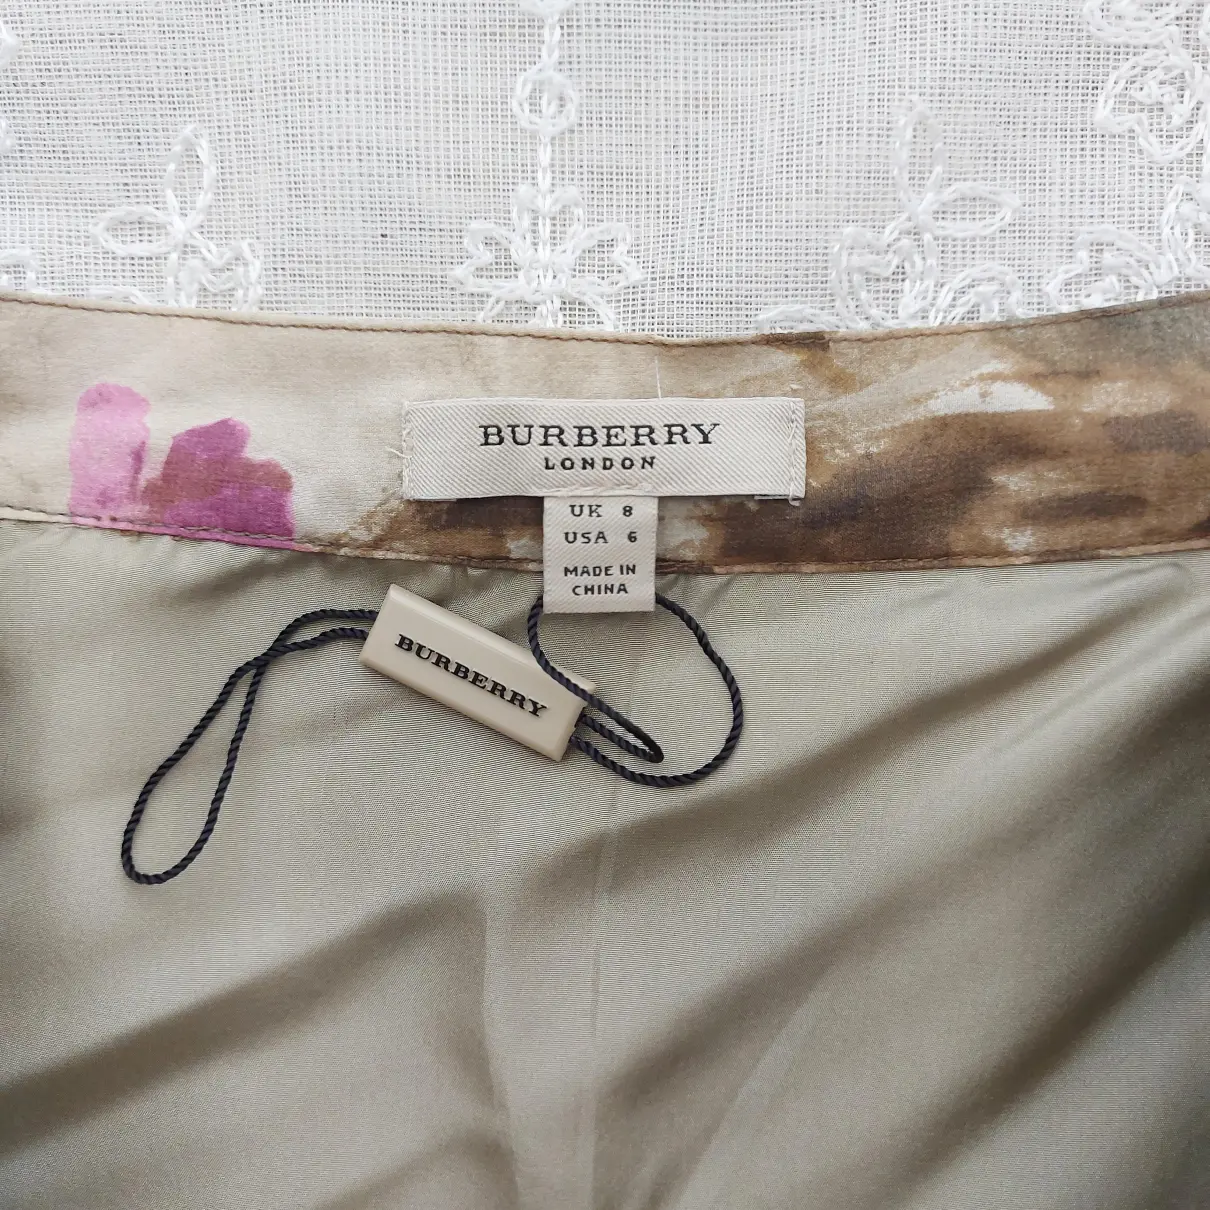 Luxury Burberry Skirts Women